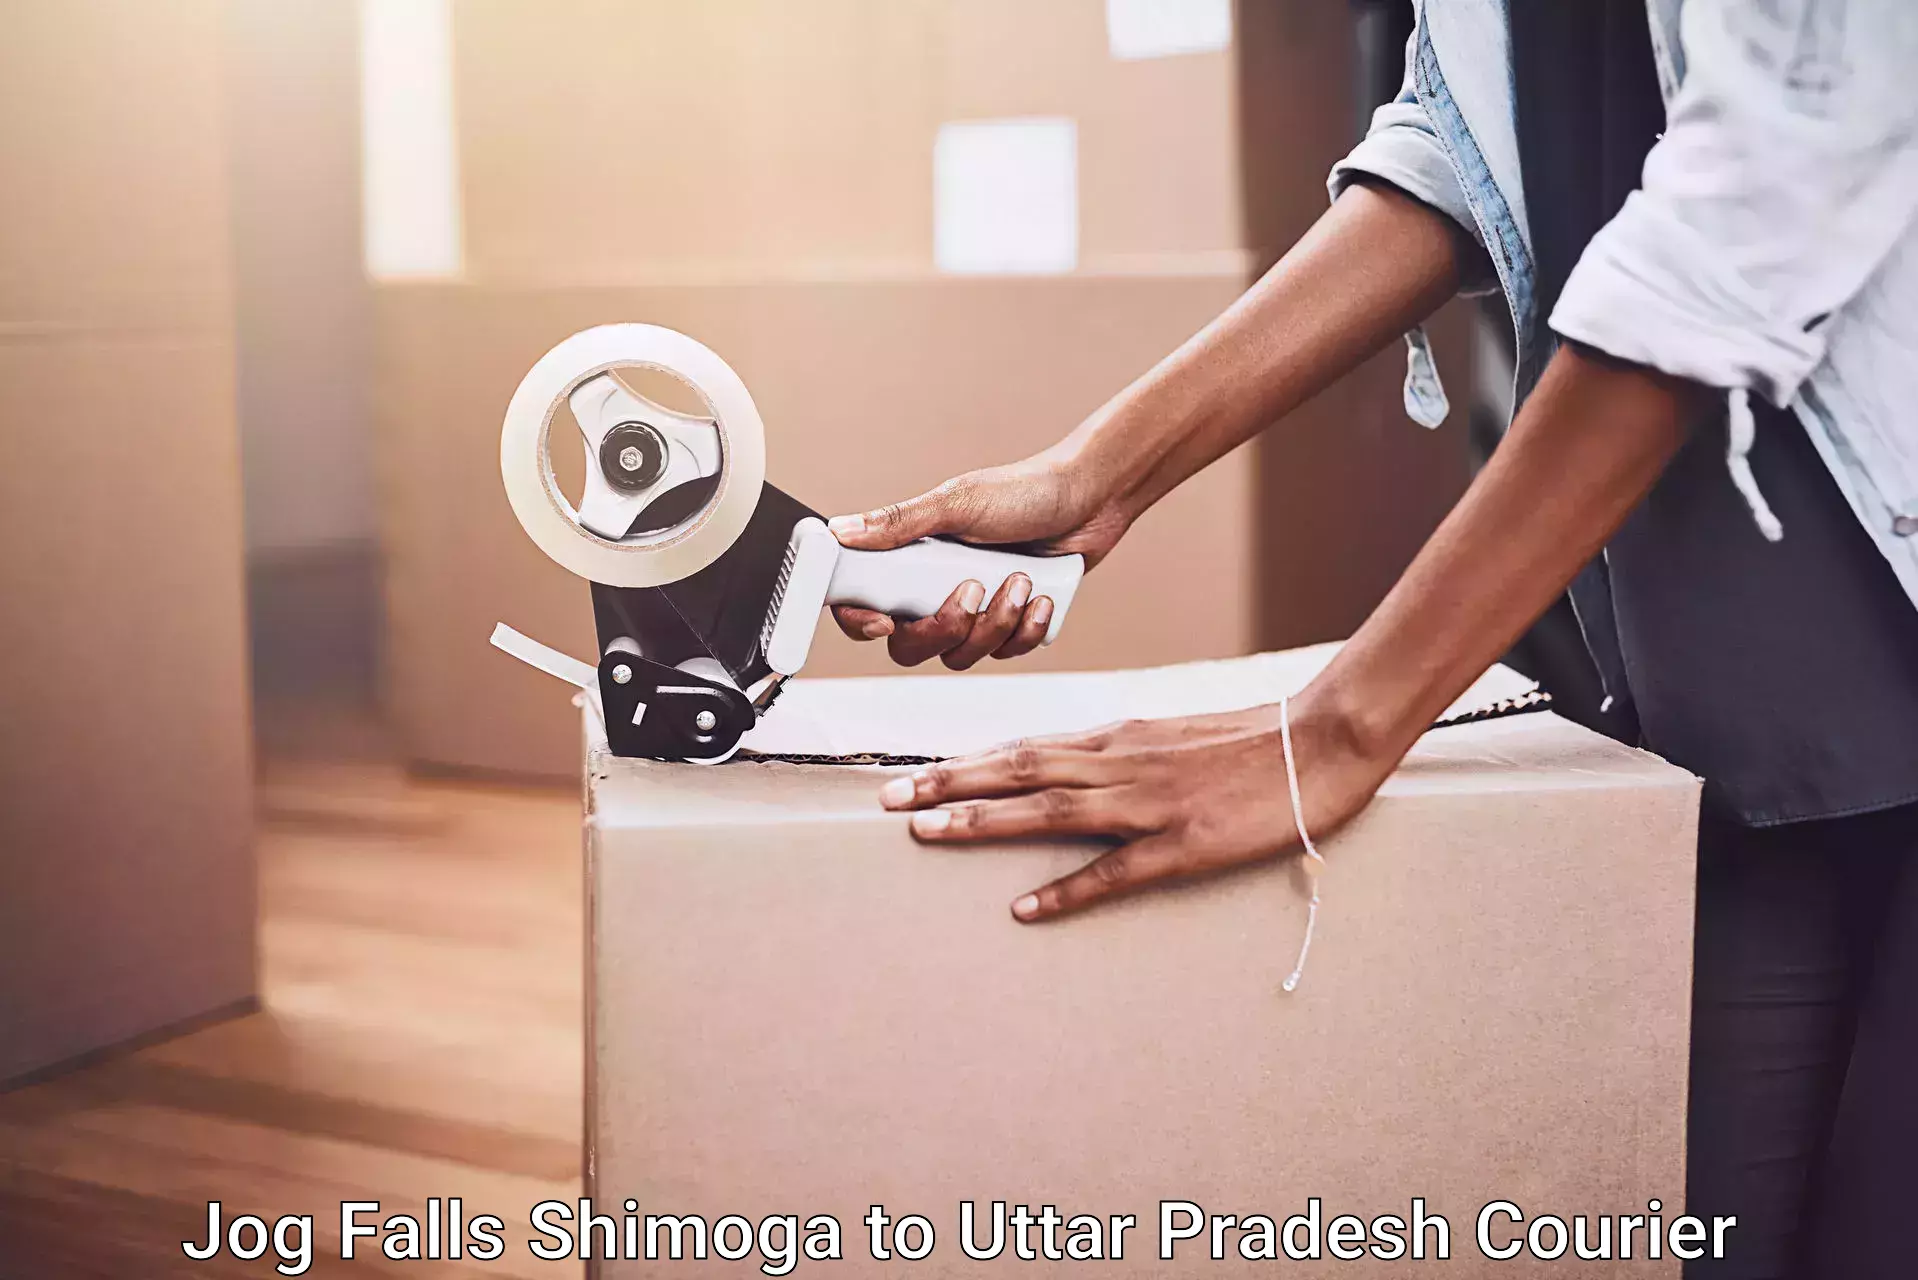 Furniture moving experts Jog Falls Shimoga to Lucknow